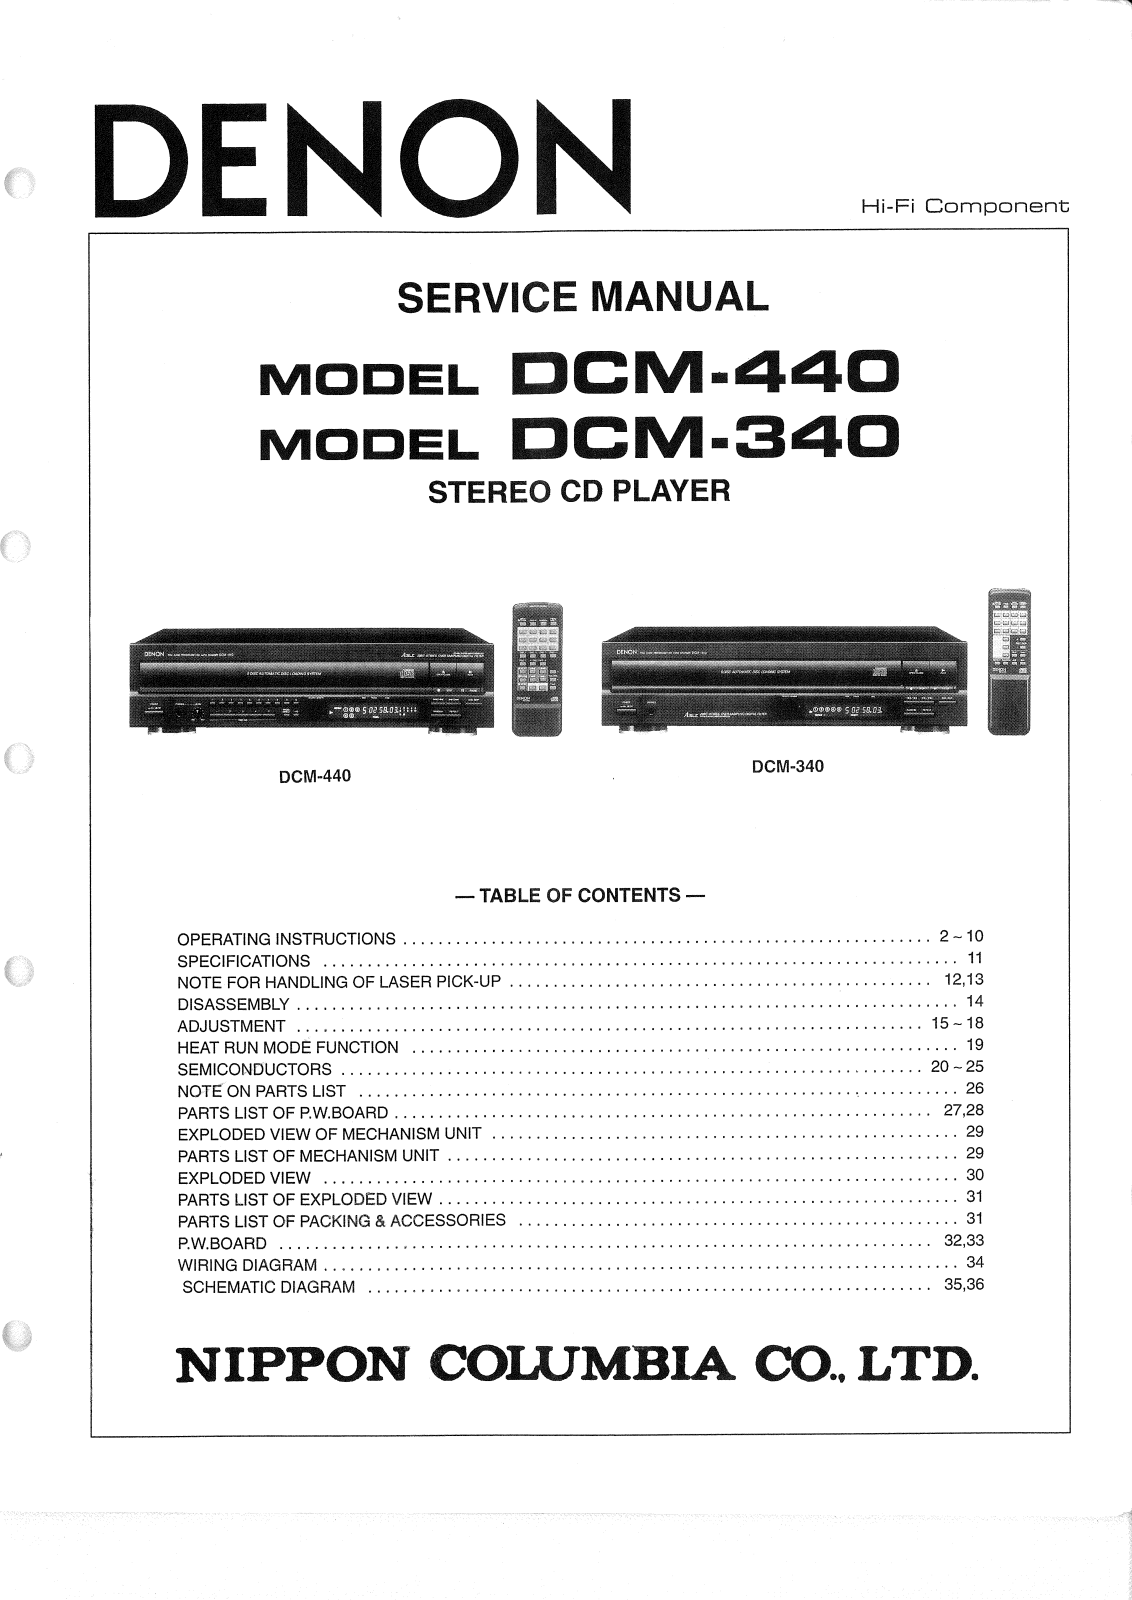 Denon DCM-340, DCM-440 Service Manual